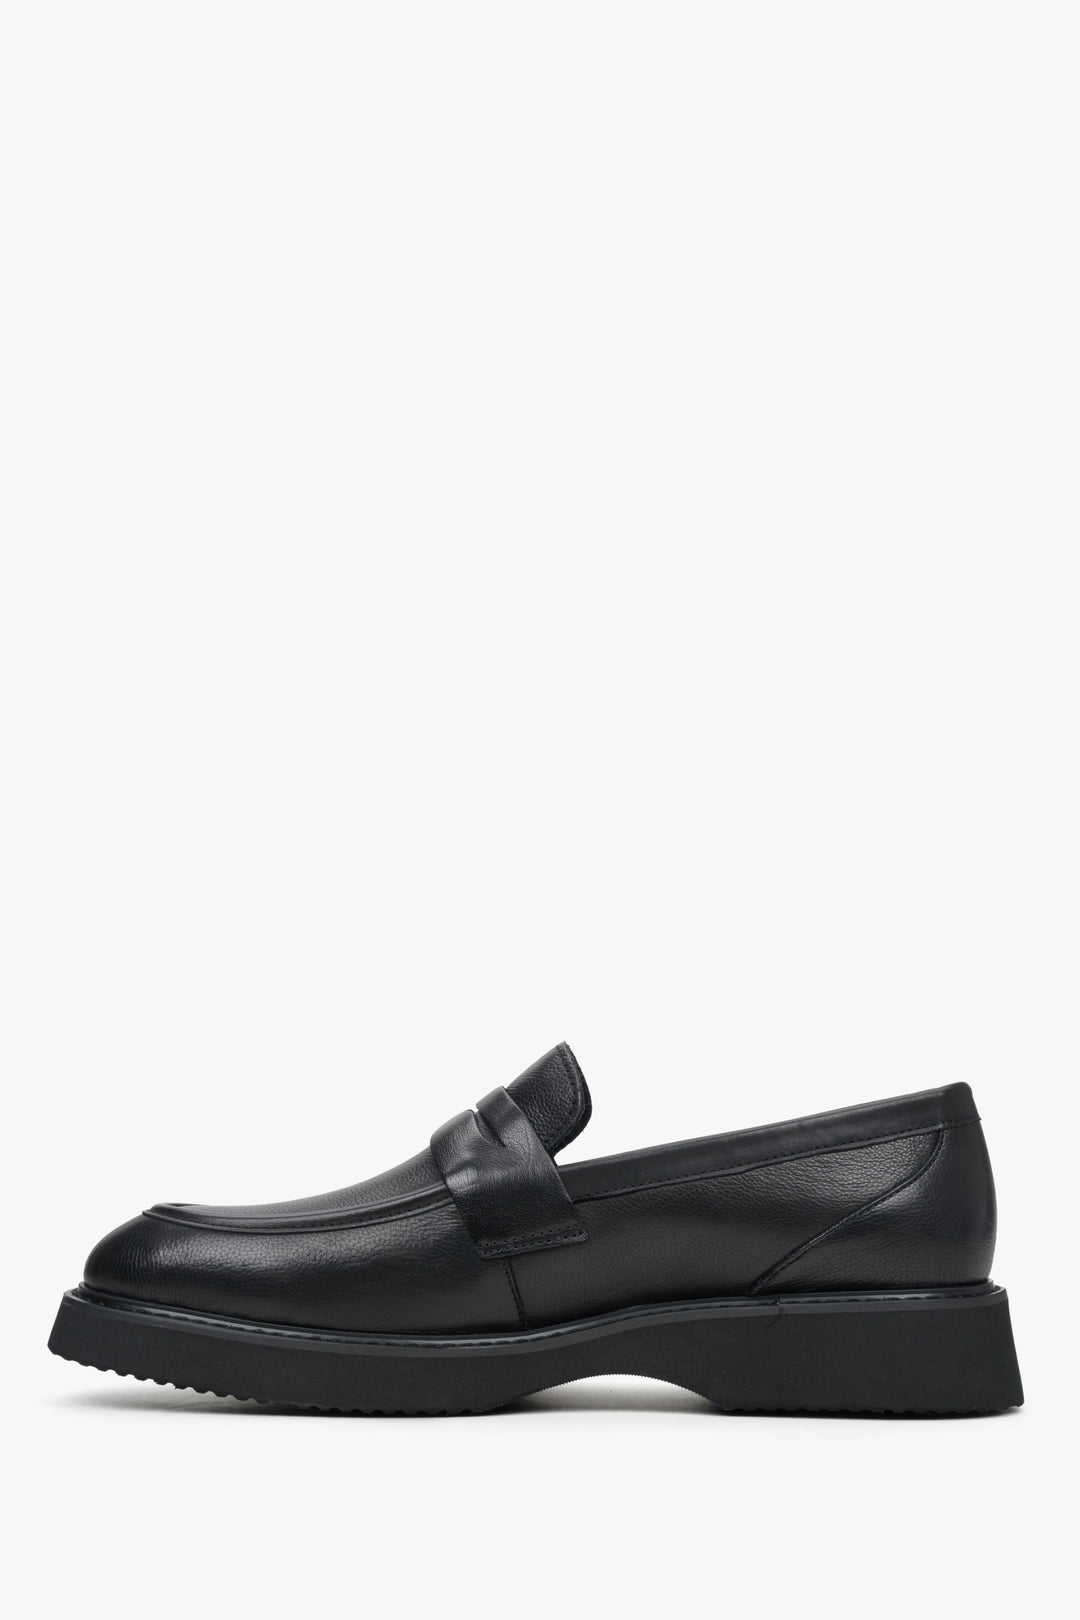 Men's black Estro loafers - shoe profile.